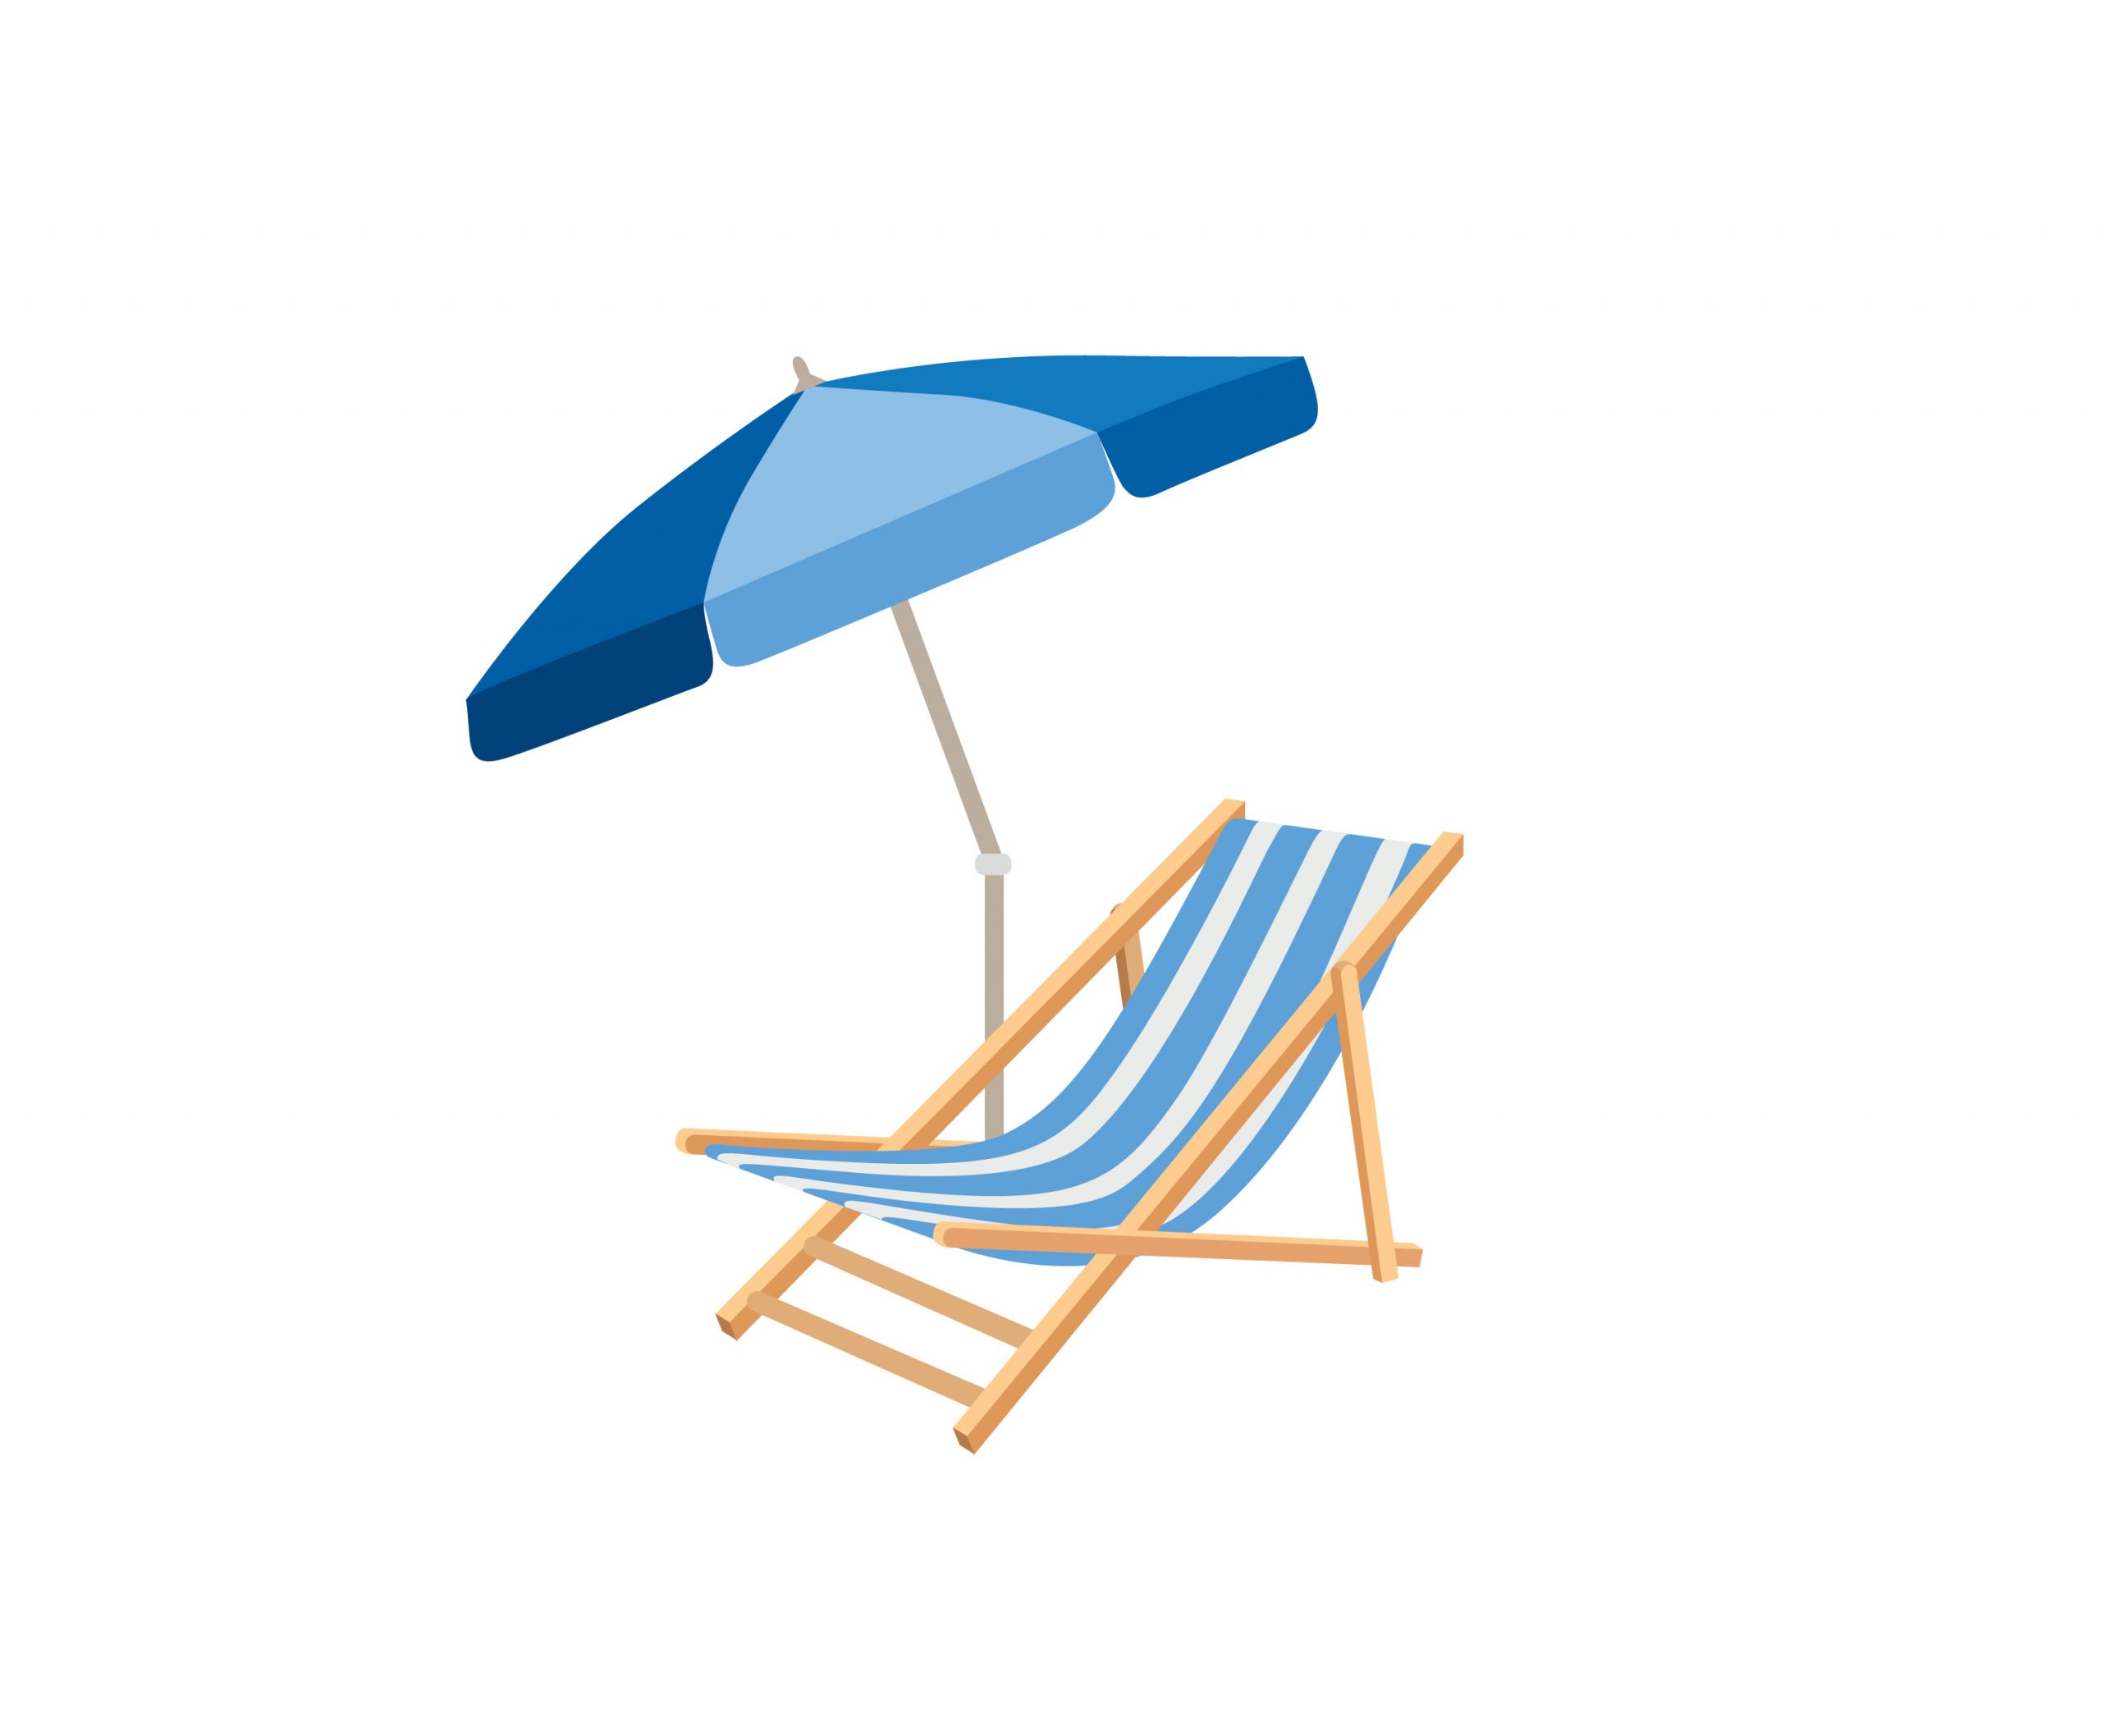 chaise longue parasol deck chair summer beach resort symbol of holidays